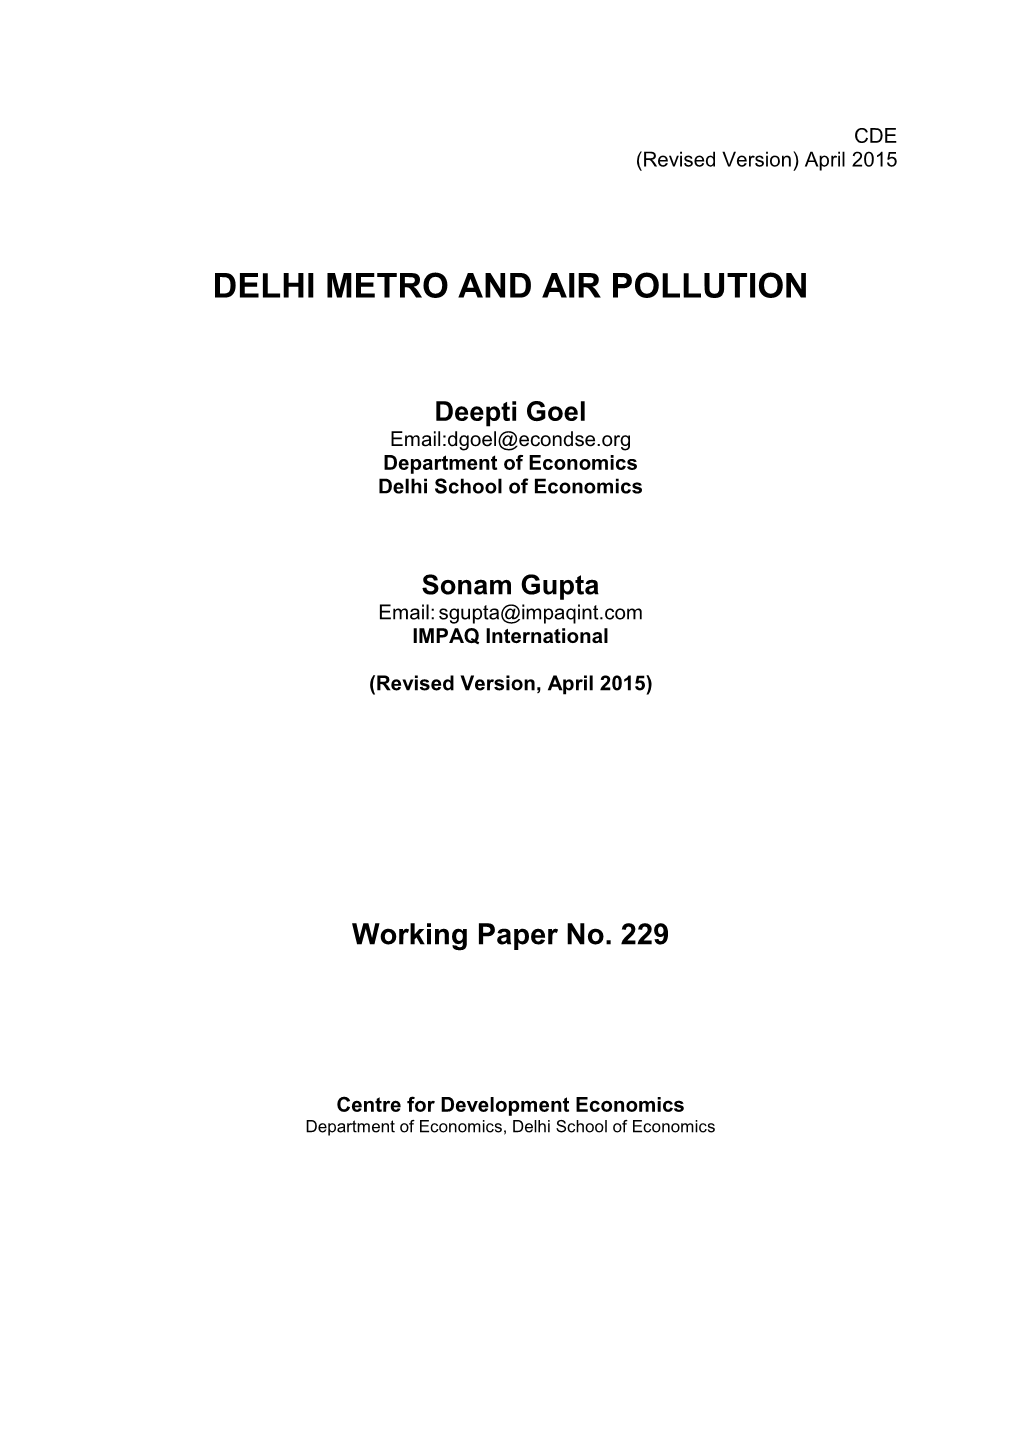 Delhi Metro and Air Pollution